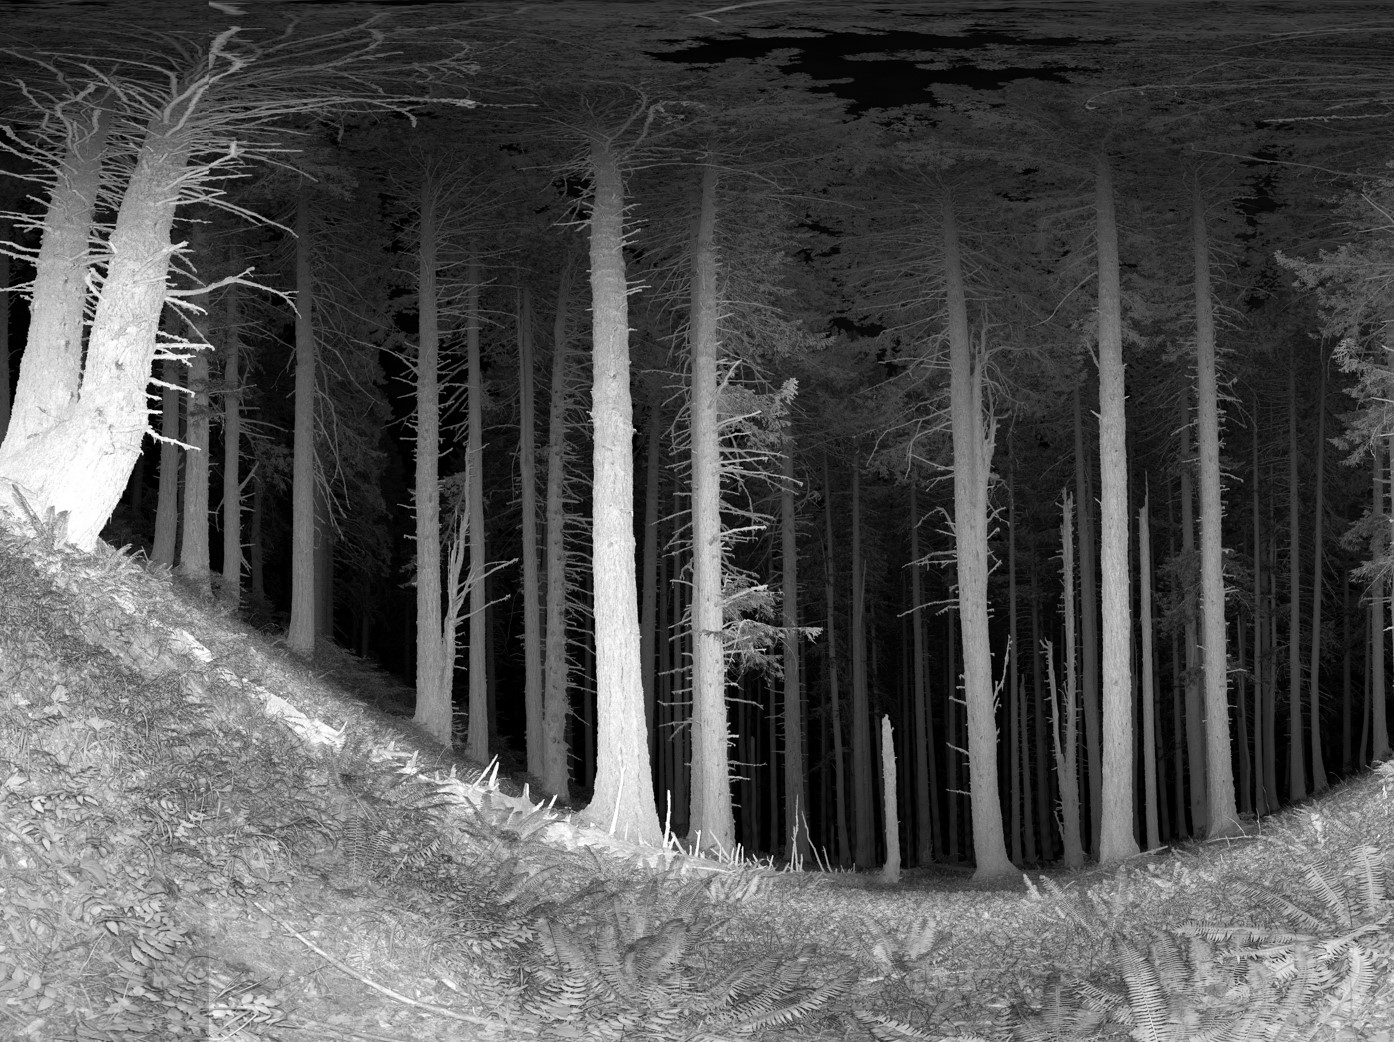 Terrestrial lidar scan of a forest